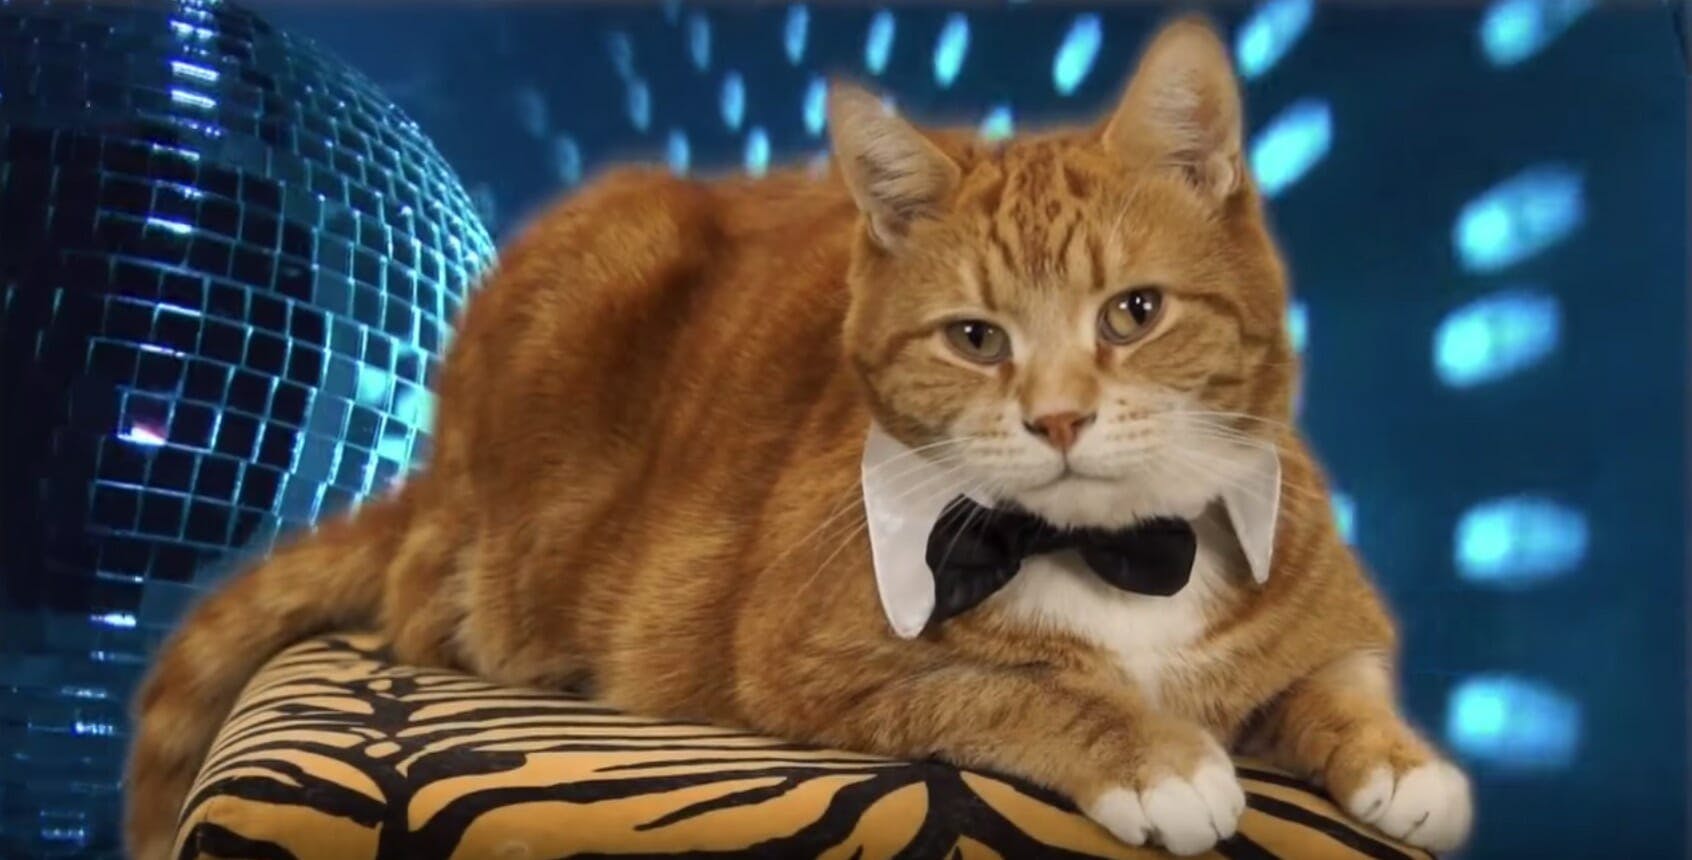 keyboard cat tribute video